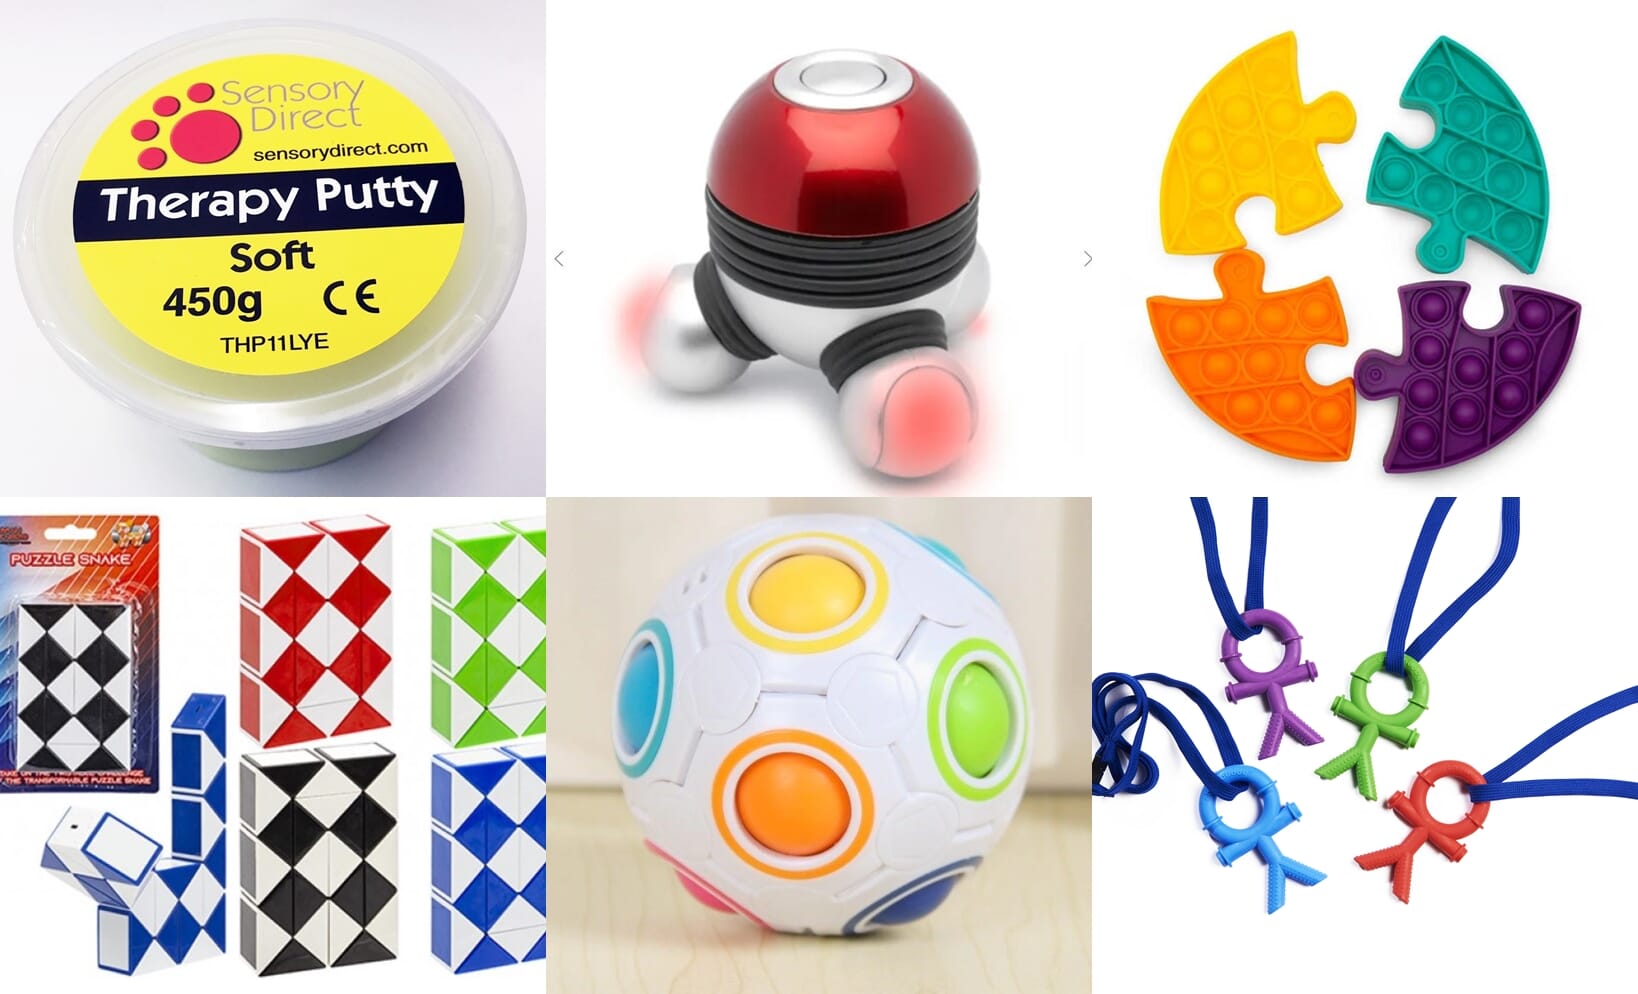 uBook Fidget Toys Sensory Toys Autism Stress Relief Toys Fiddle Toys for Kids 